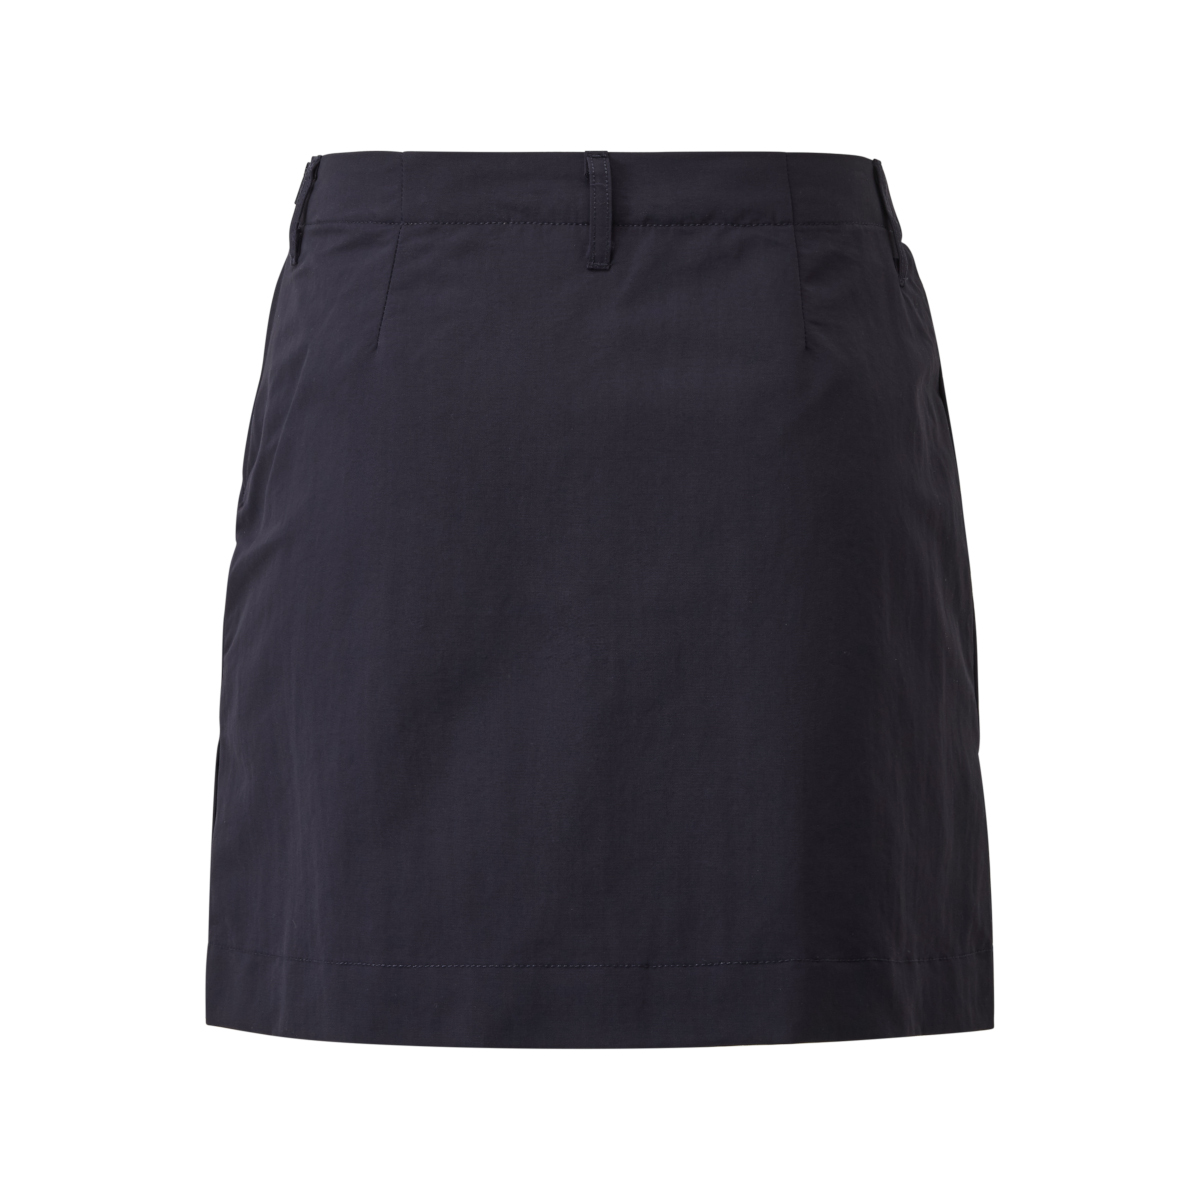 Gill UV Tec jupe-short, femme - bleu marine, taille 8